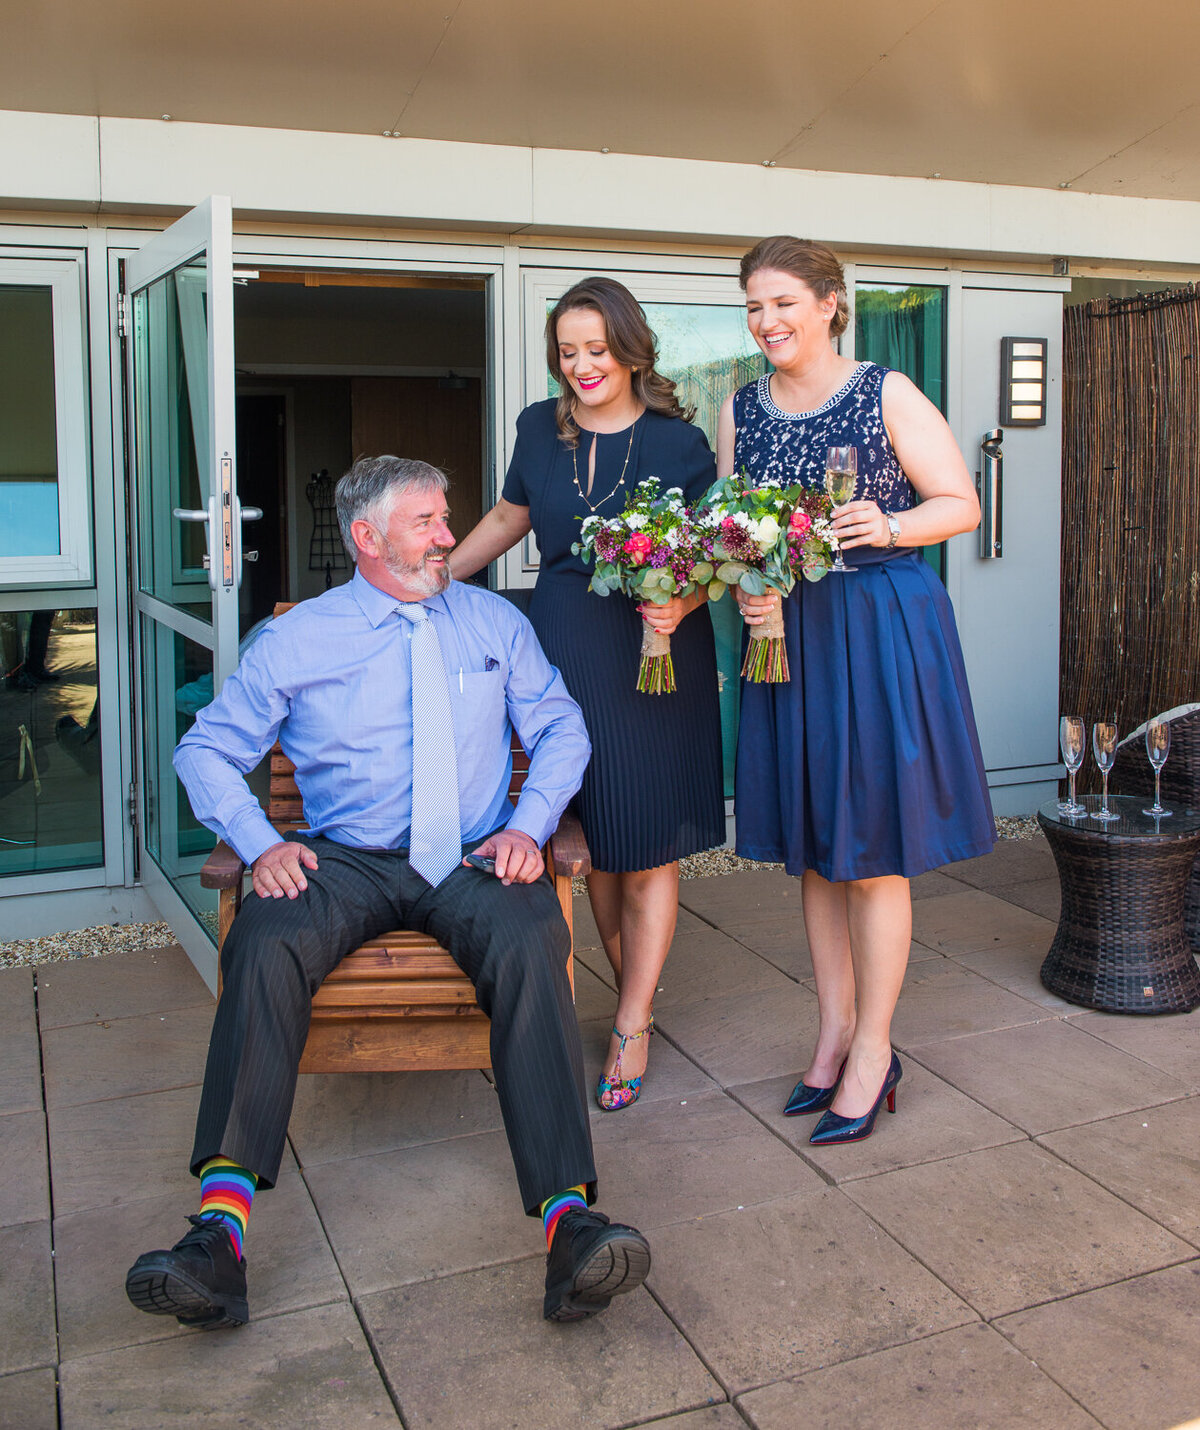 Two brides looking at dad's rainbow socks